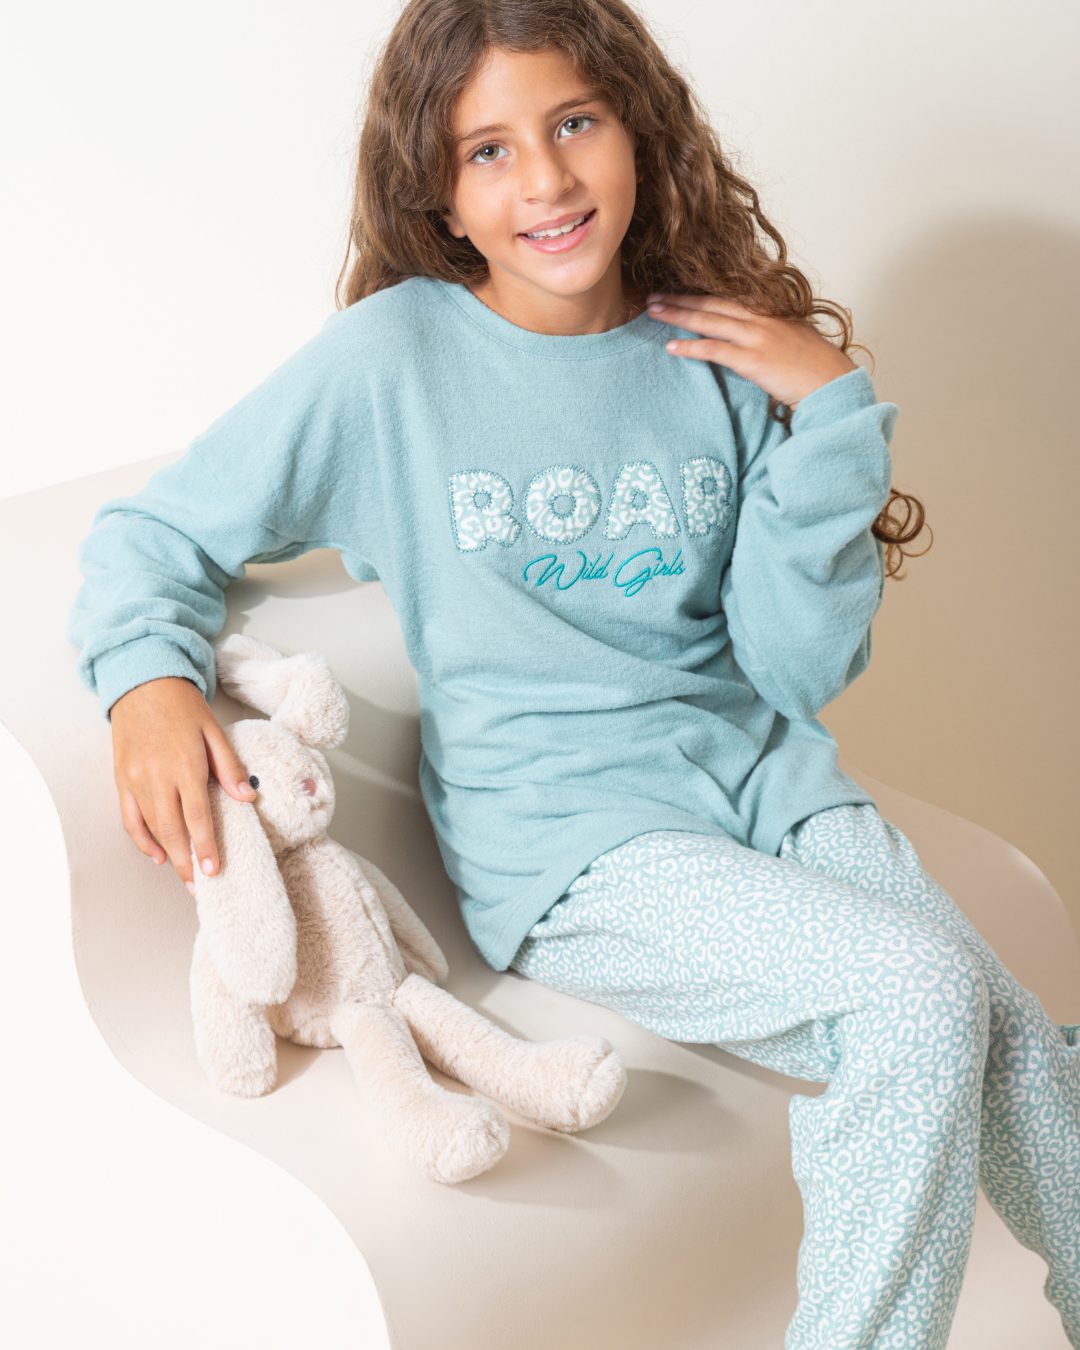 Roar girls' long sleeve pajamas, thermal fabric